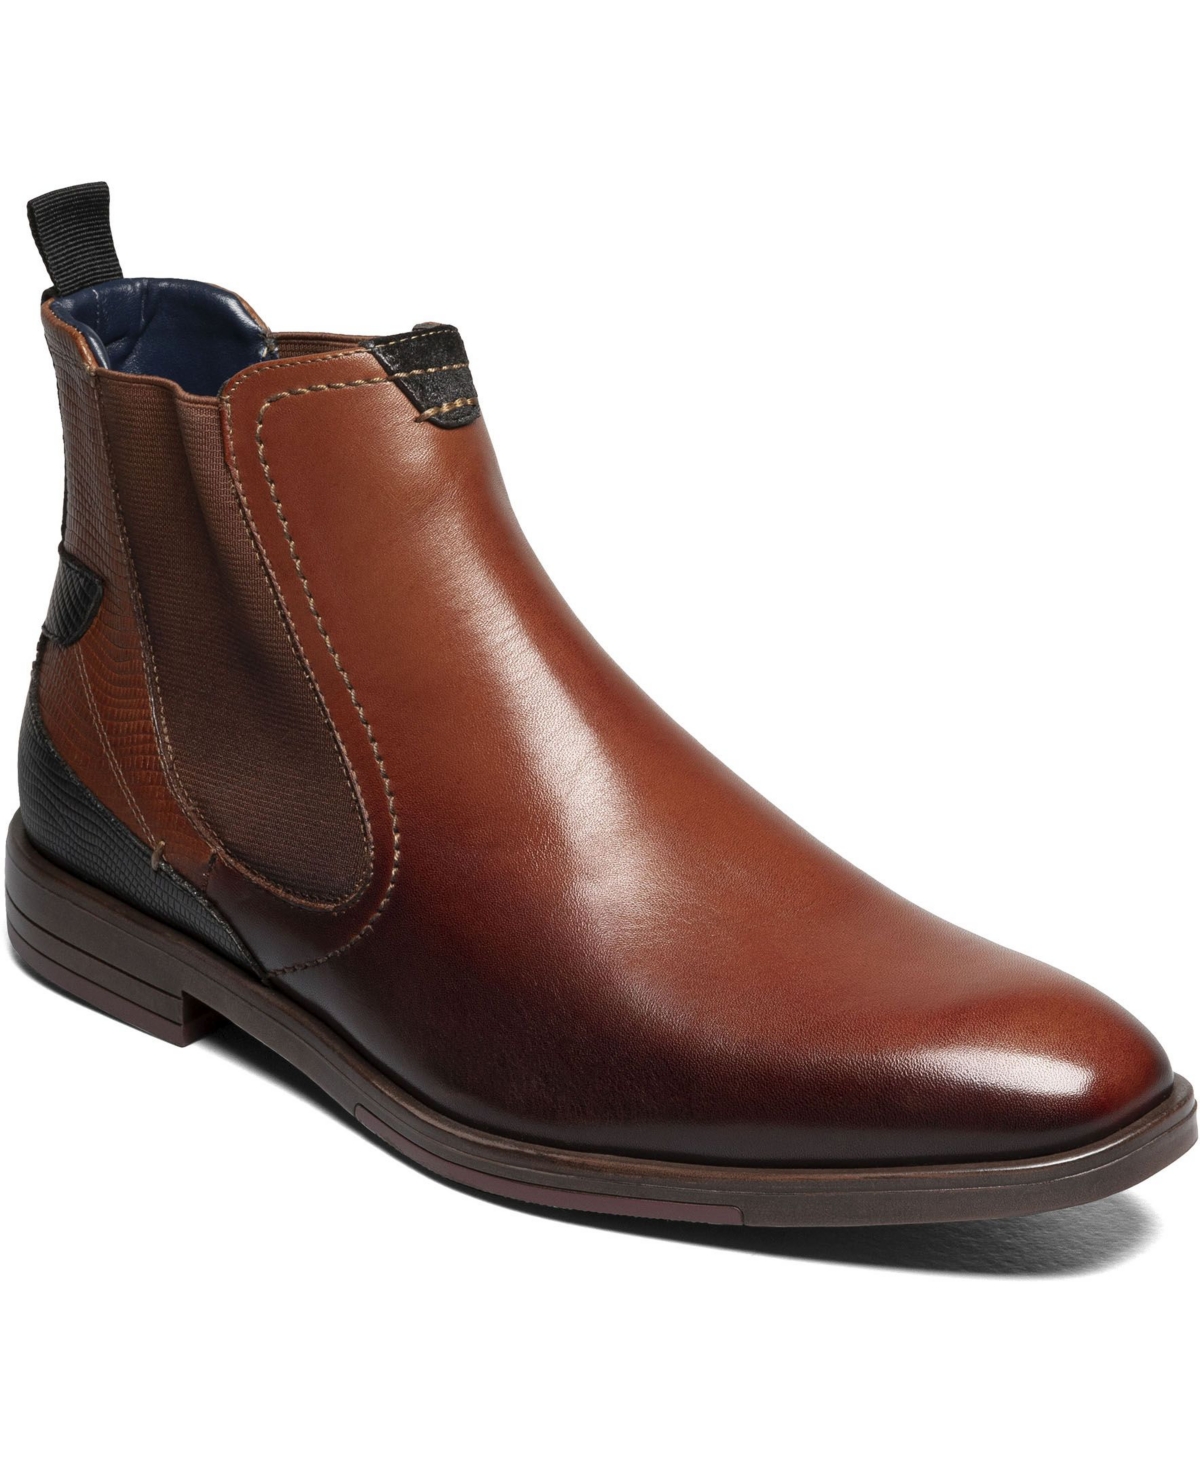 Men's Rayford Plain Toe Chelsea Boots - Tan